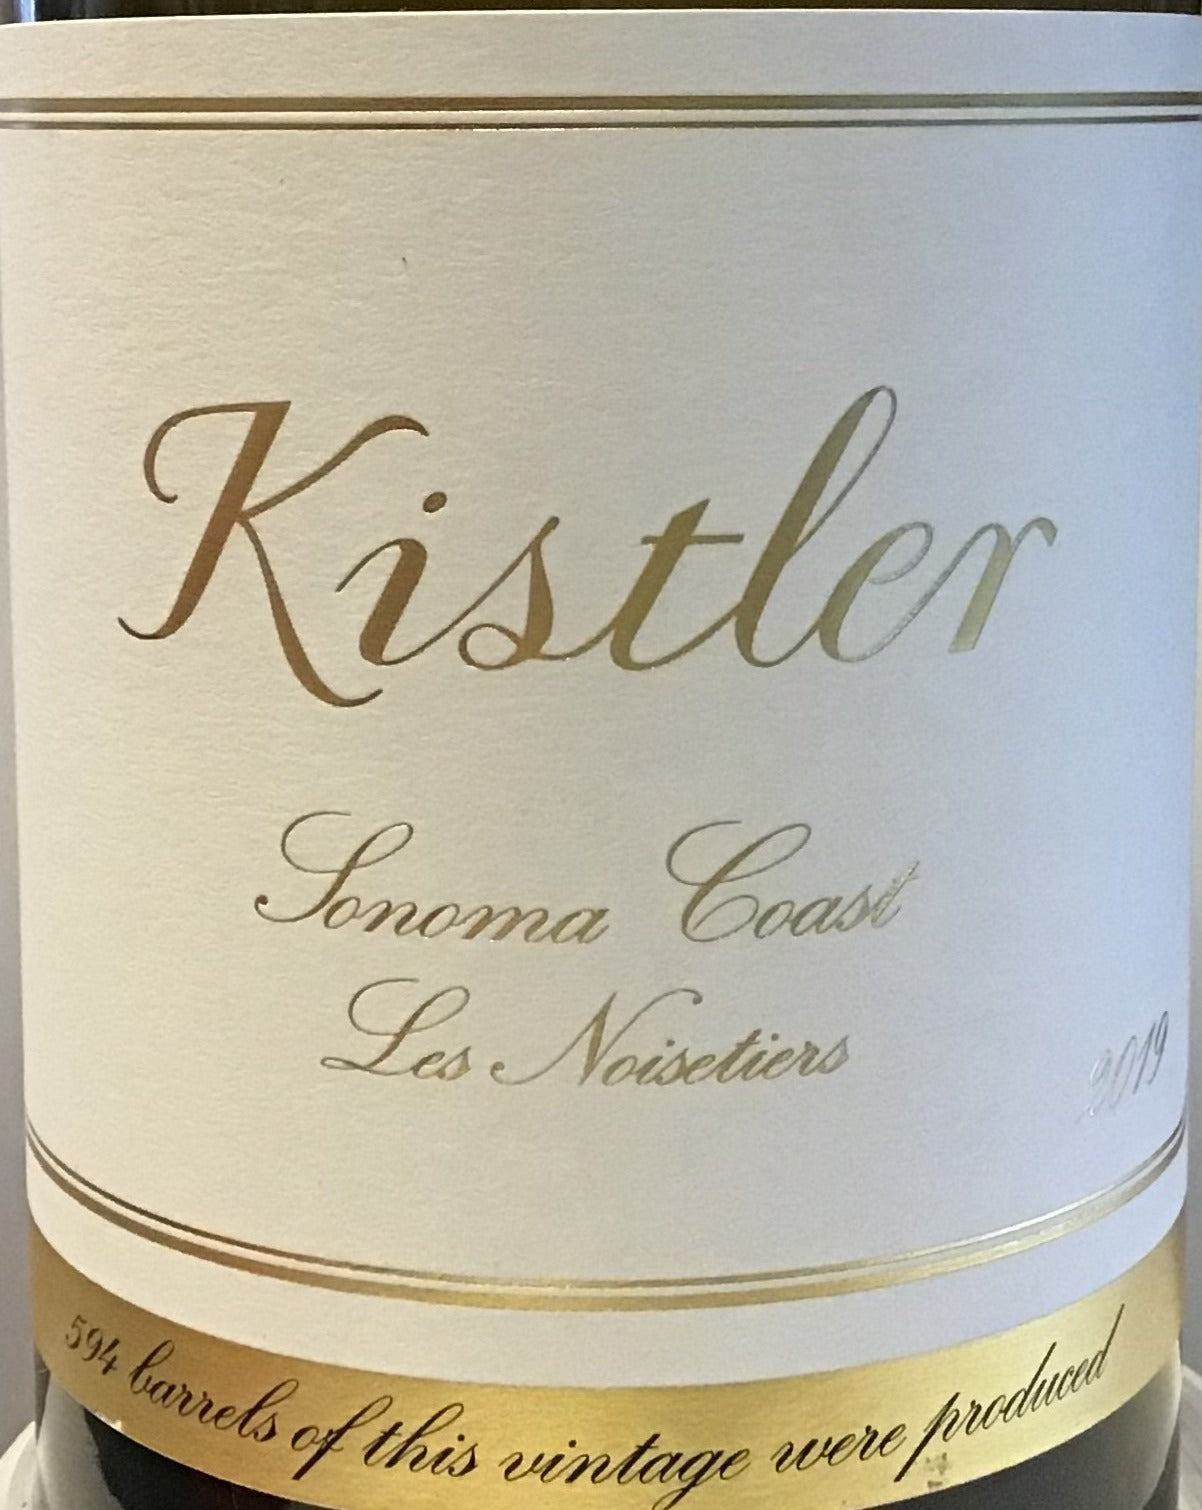 Kistler 'Les Noisetiers' - Sonoma Coast Chardonnay